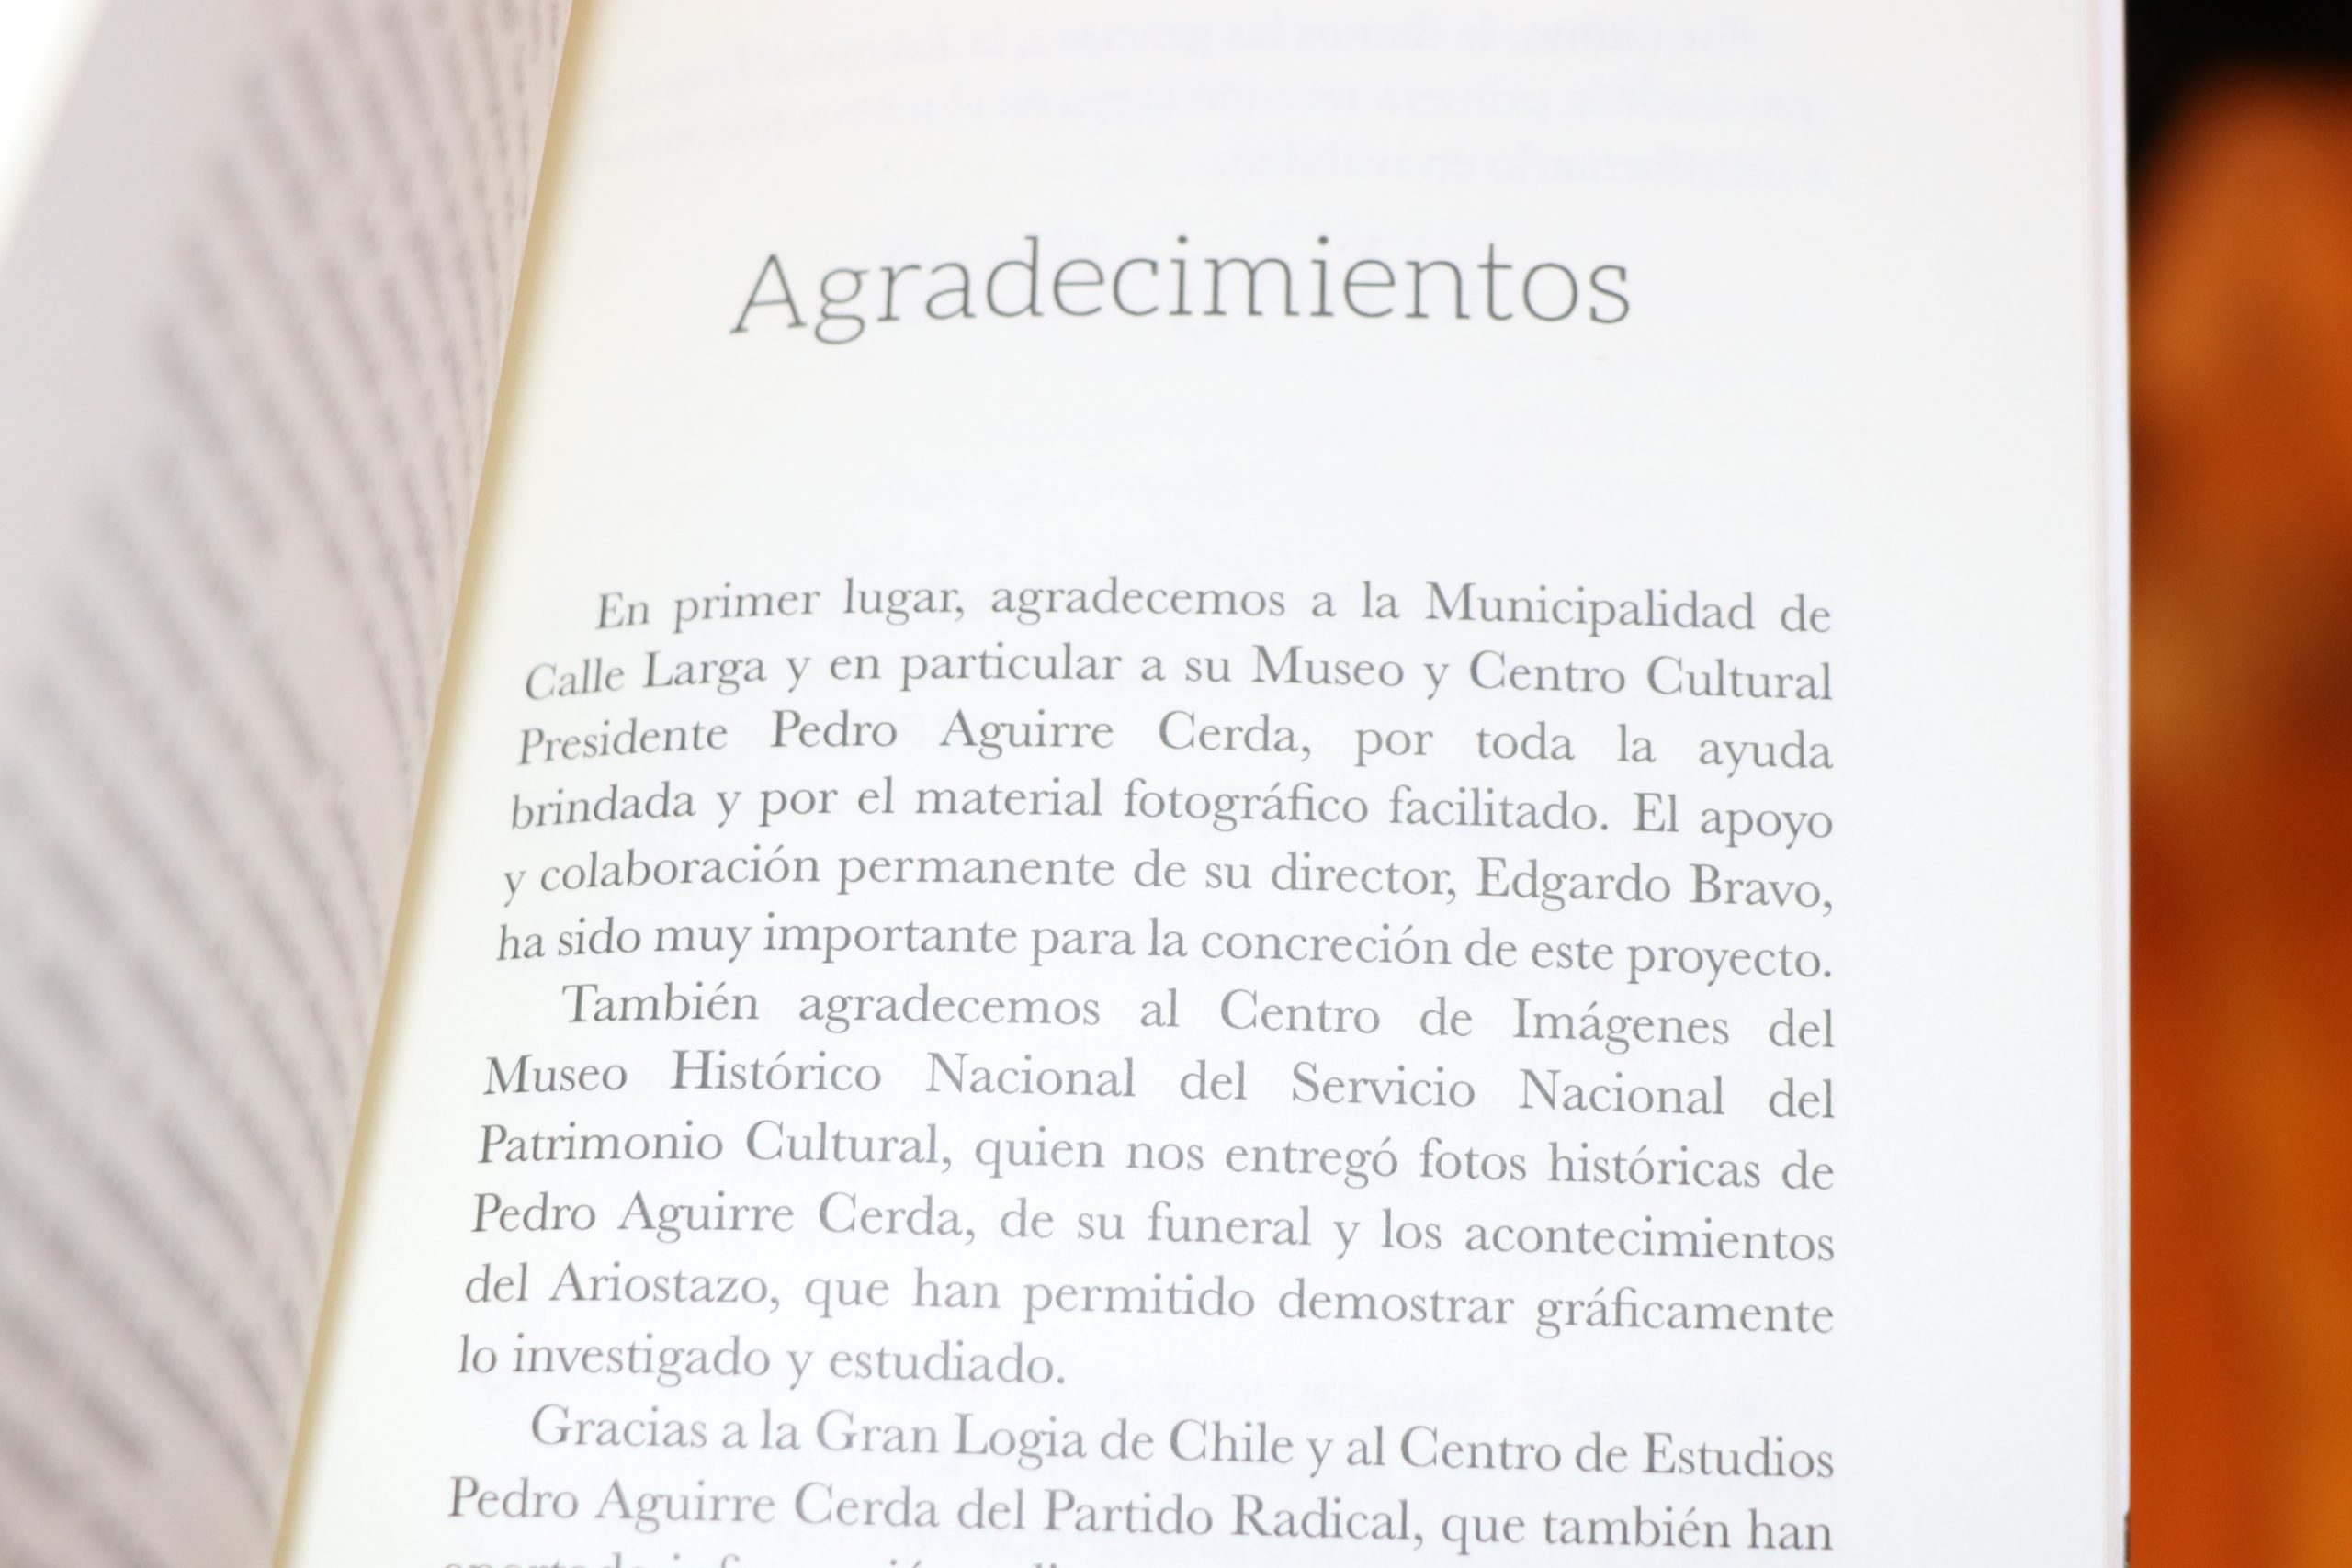 CALLE LARGA: Publican libro que relata historias inéditas del ex Presidente Pedro Aguirre Cerda